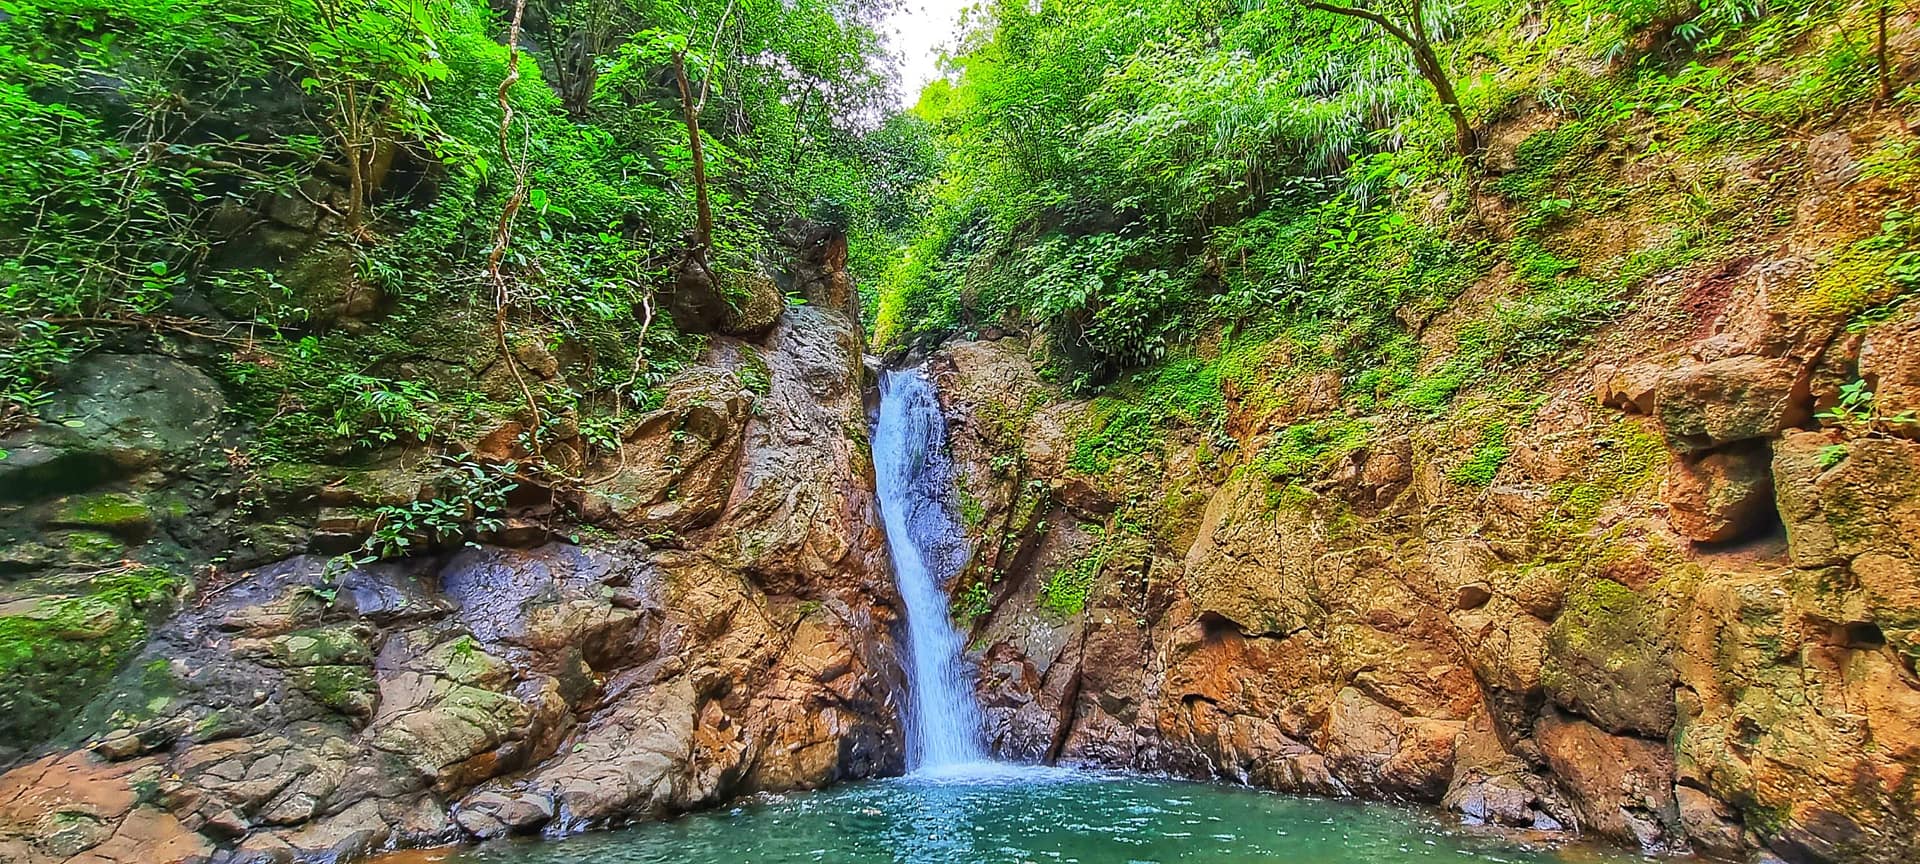 Property For Sale In Guanacaste - Los Saltos Waterfall & Farm